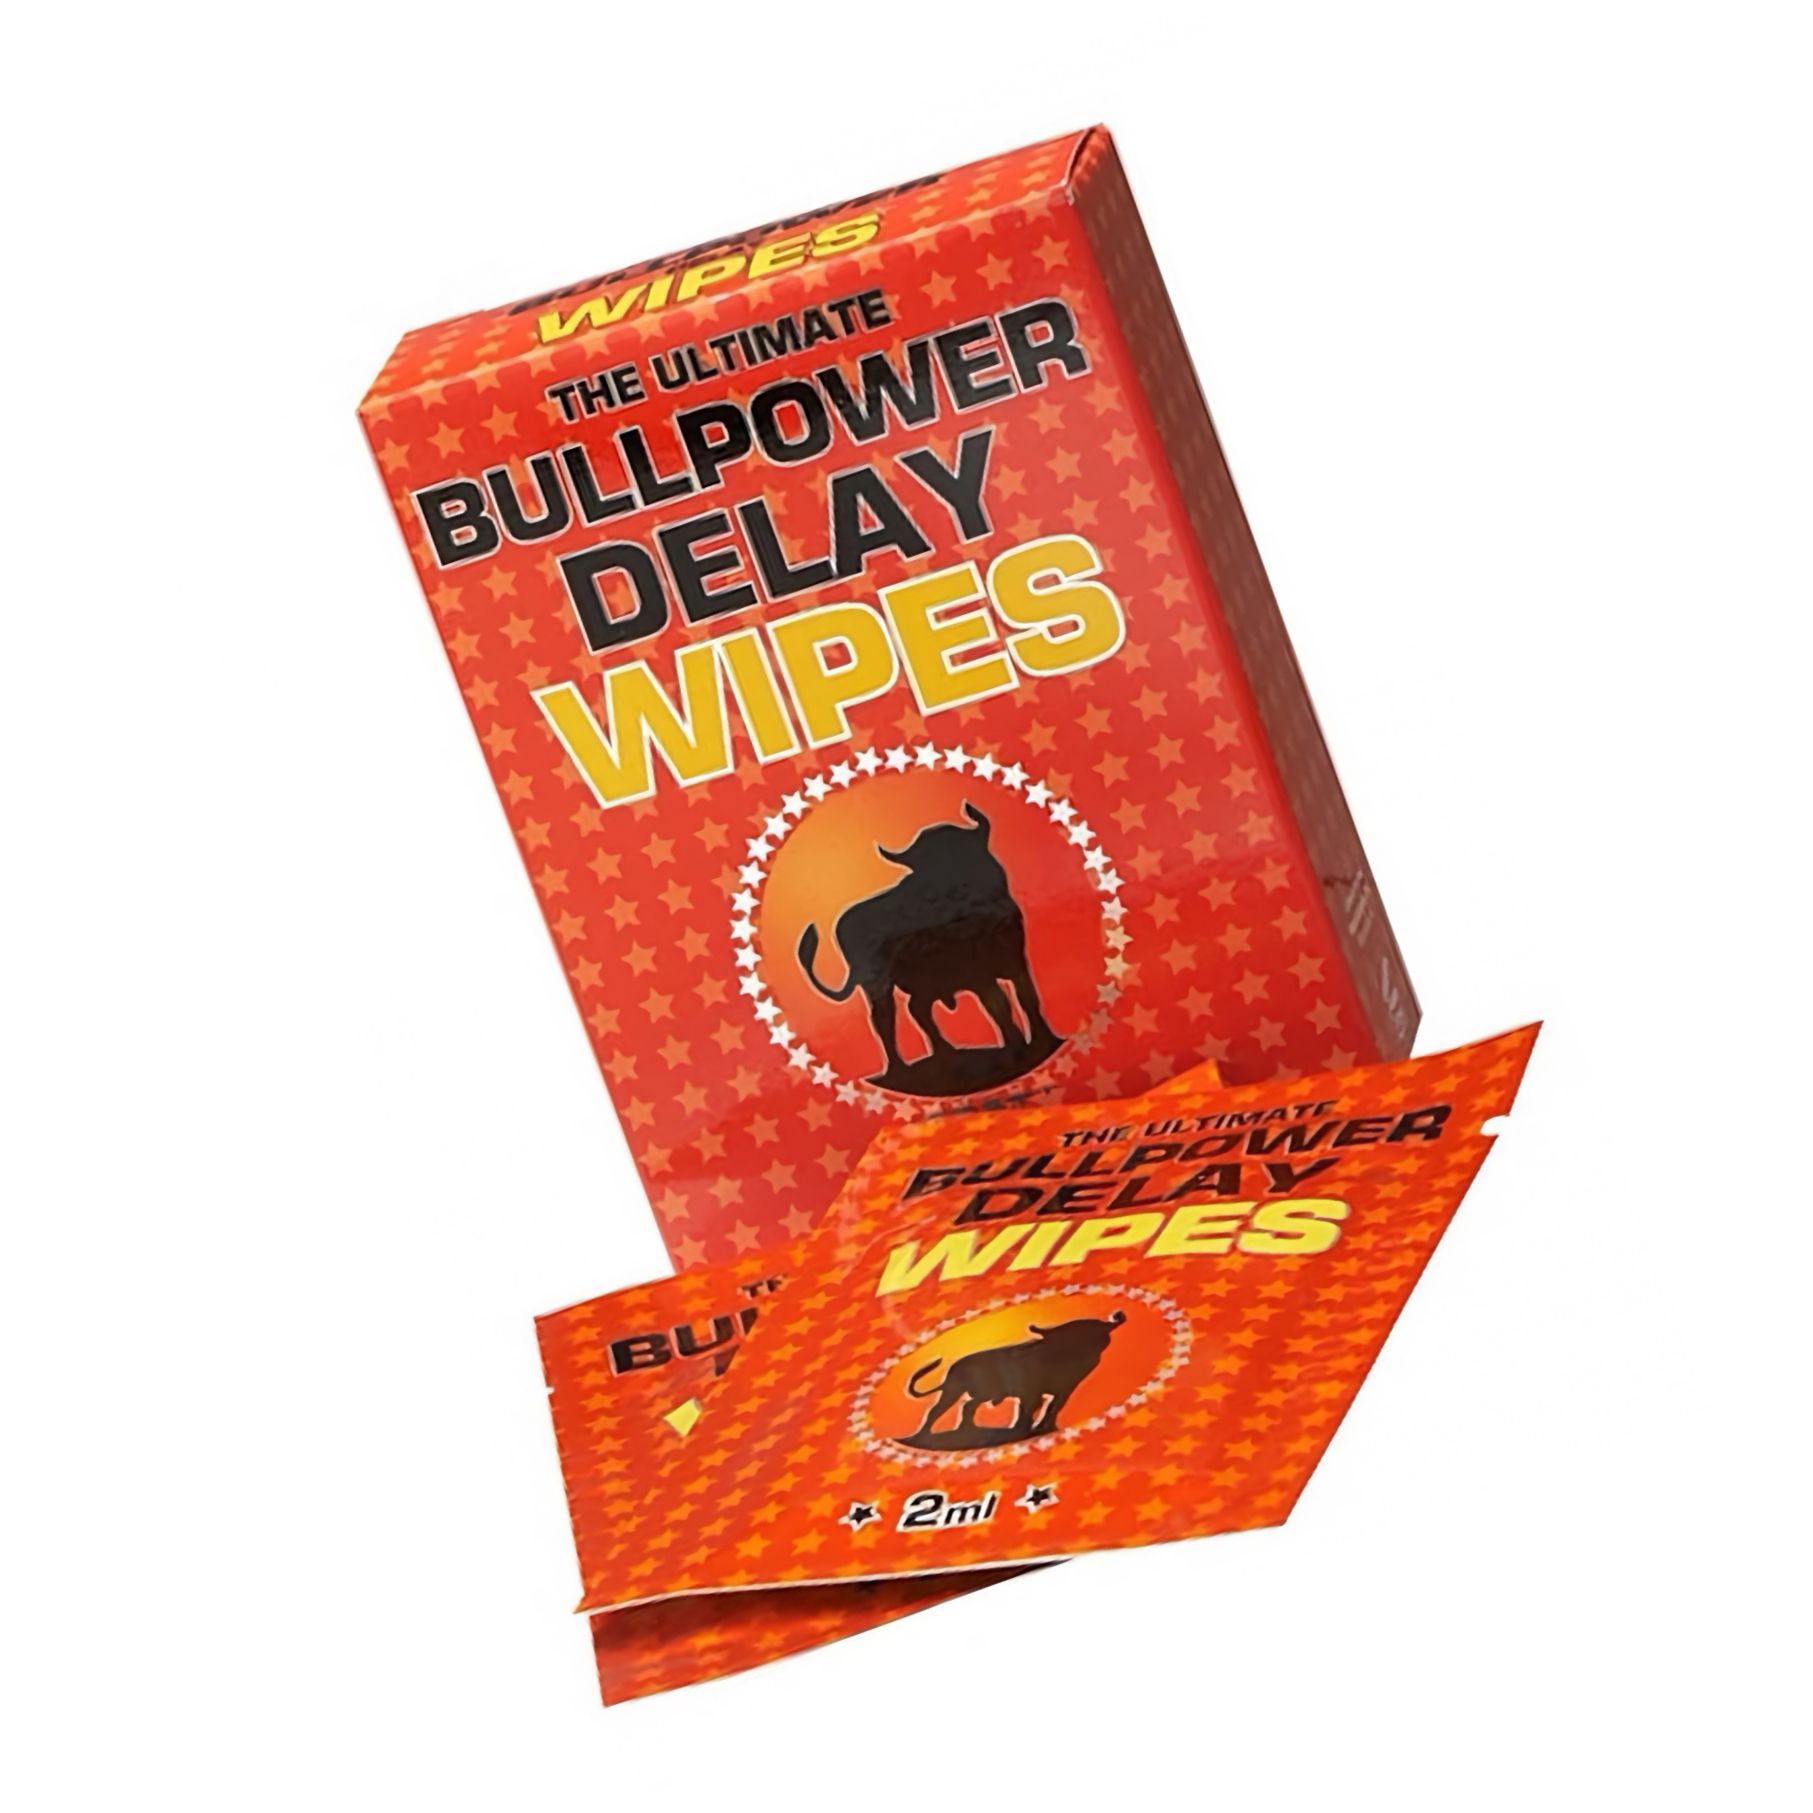 Servetele Antiejaculare Bull Power Delay